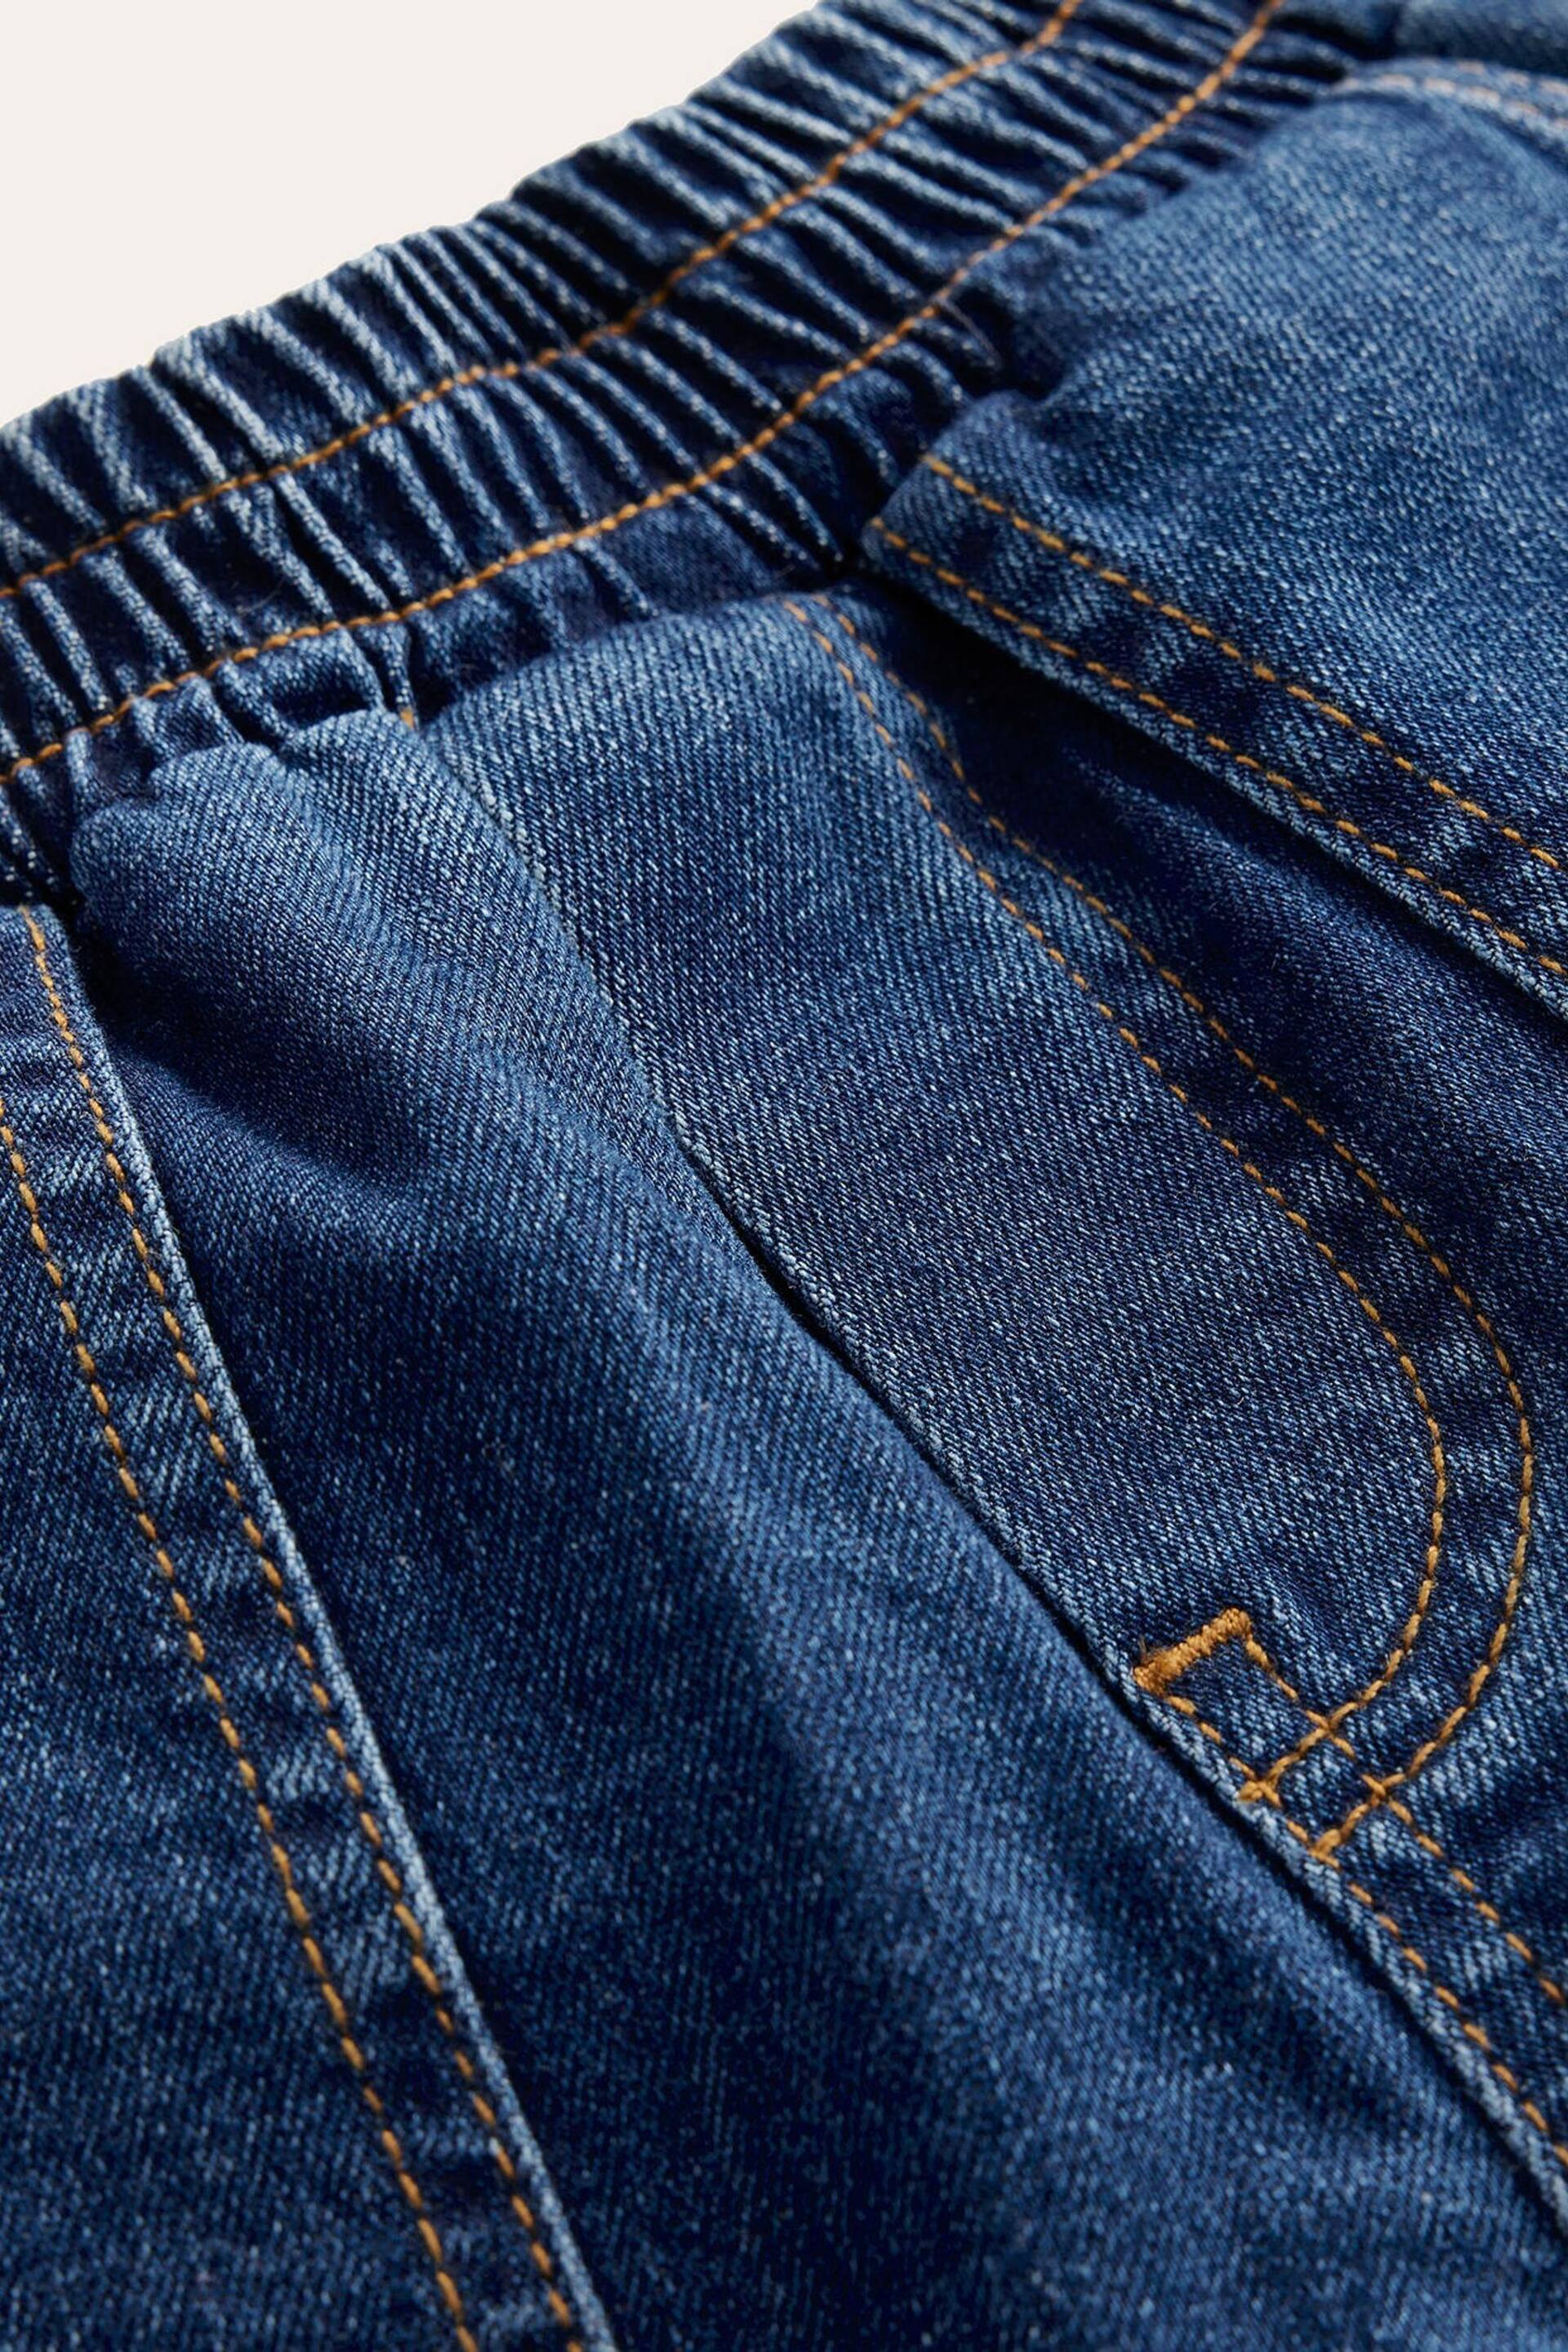 Boden Blue Pull-On Denim Jeans - Image 3 of 3